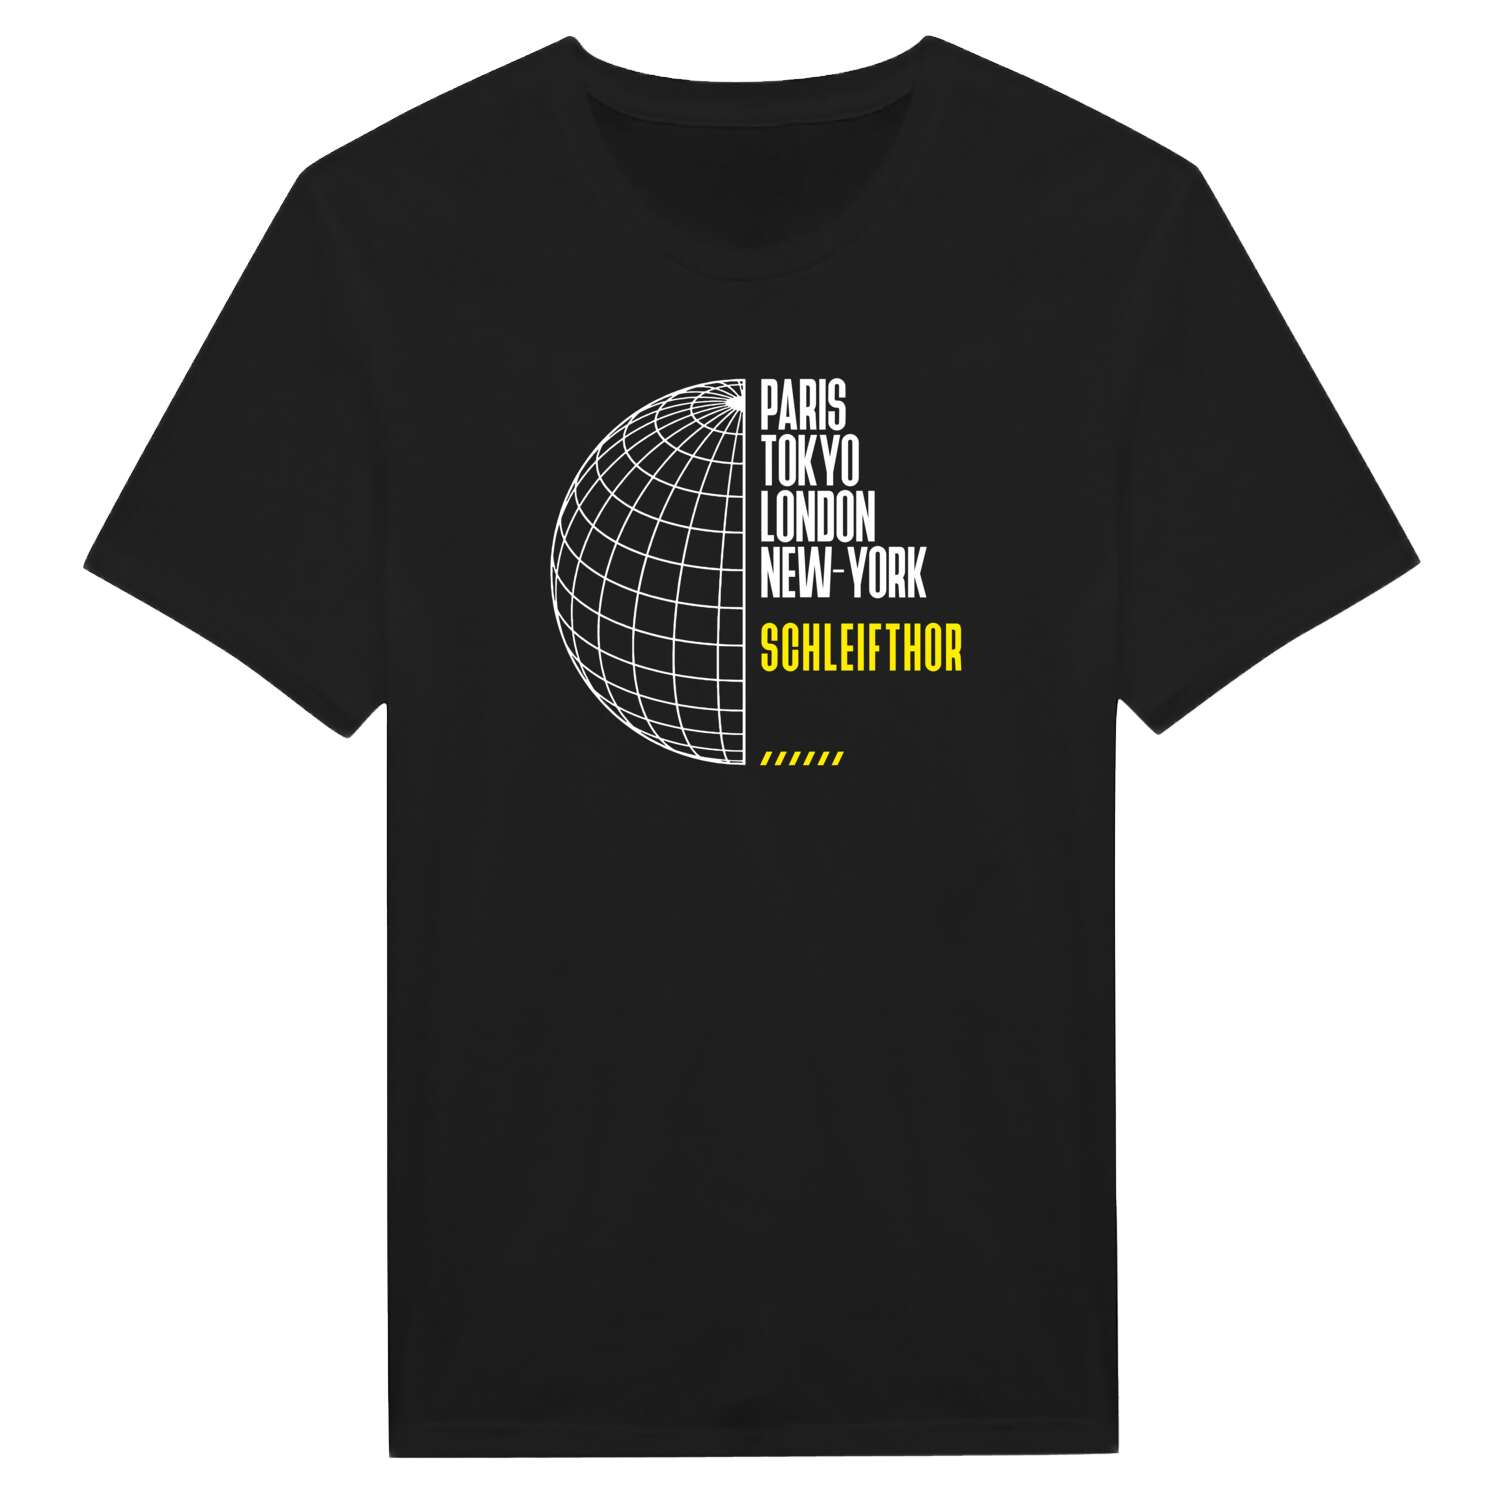 Schleifthor T-Shirt »Paris Tokyo London«